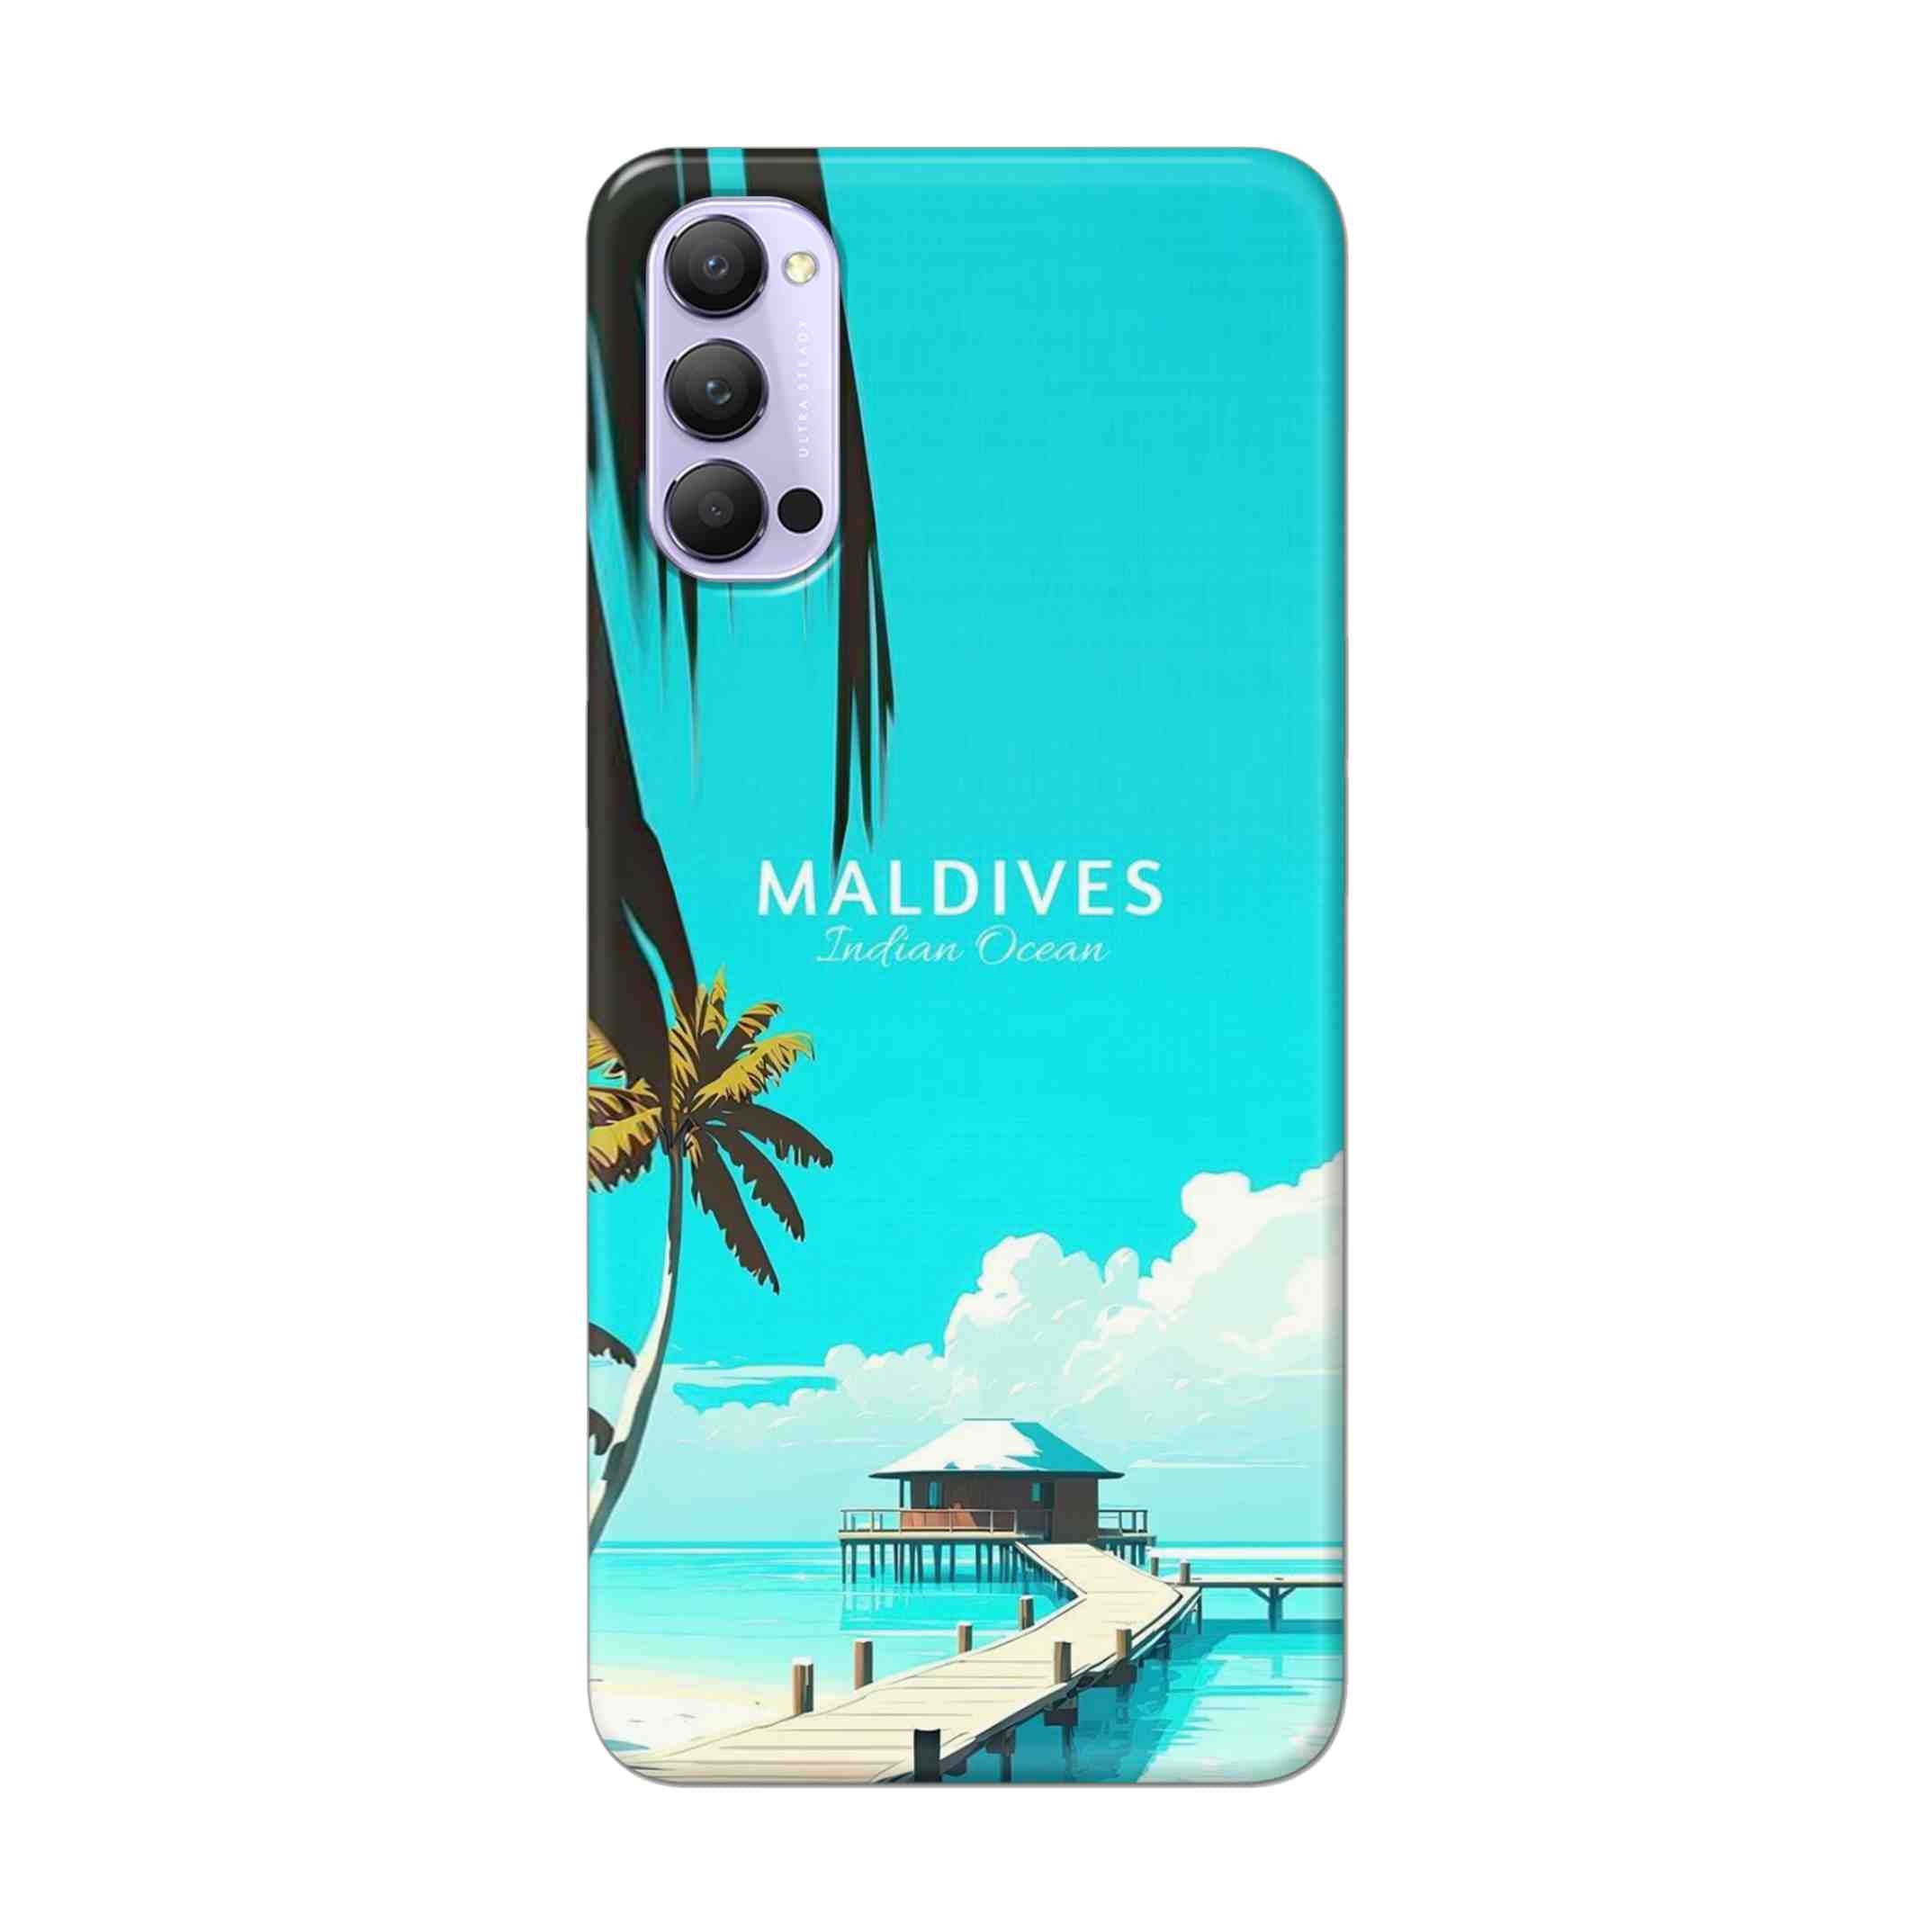 Buy Maldives Hard Back Mobile Phone Case Cover For Oppo Reno 4 Pro Online